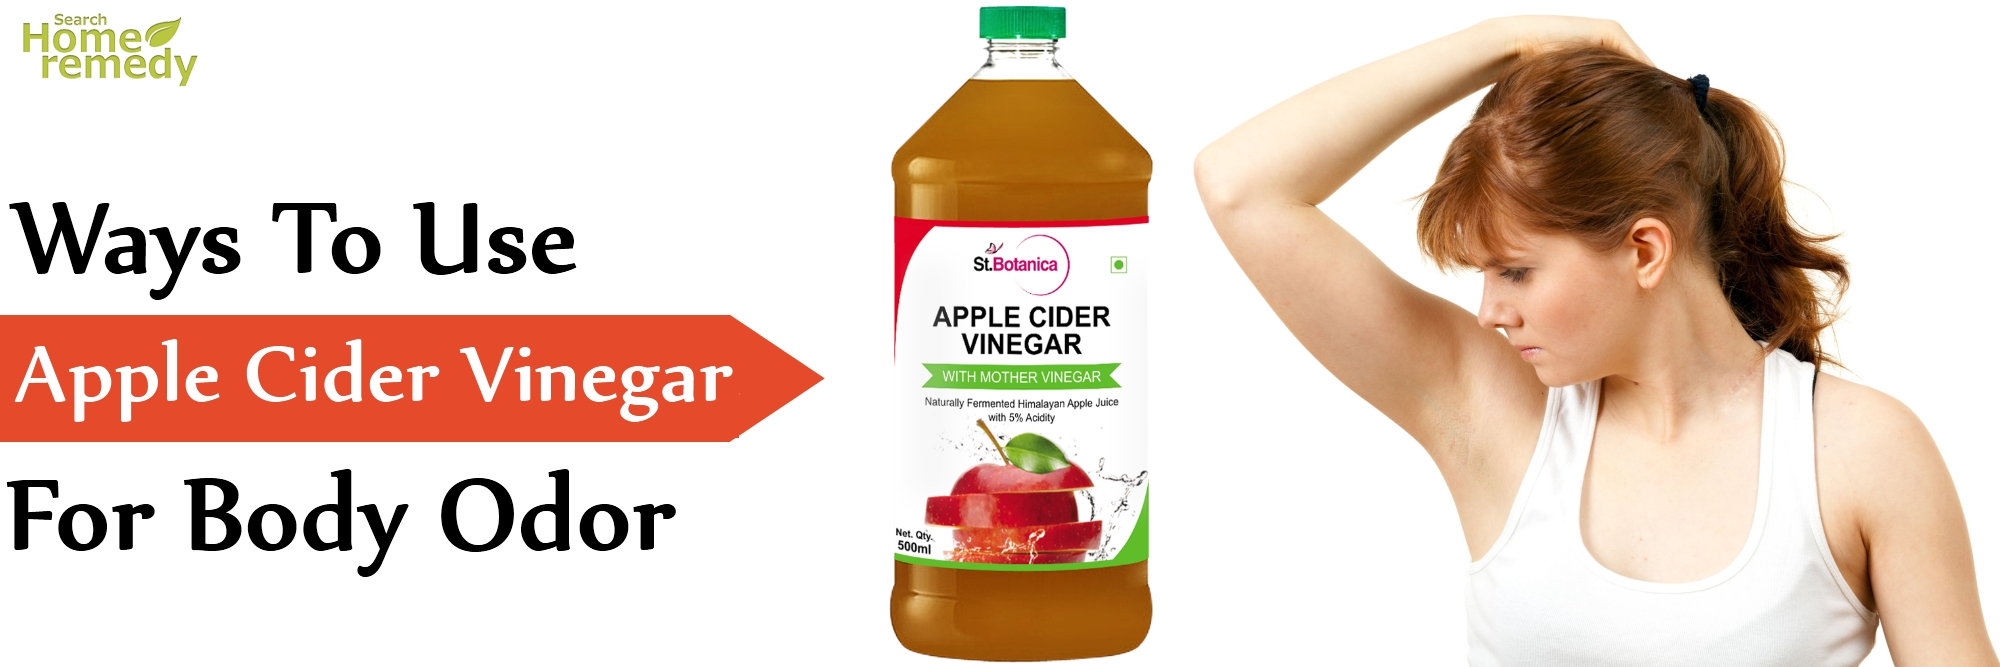 3 Easy Ways To Use Apple Cider Vinegar For Body Odor